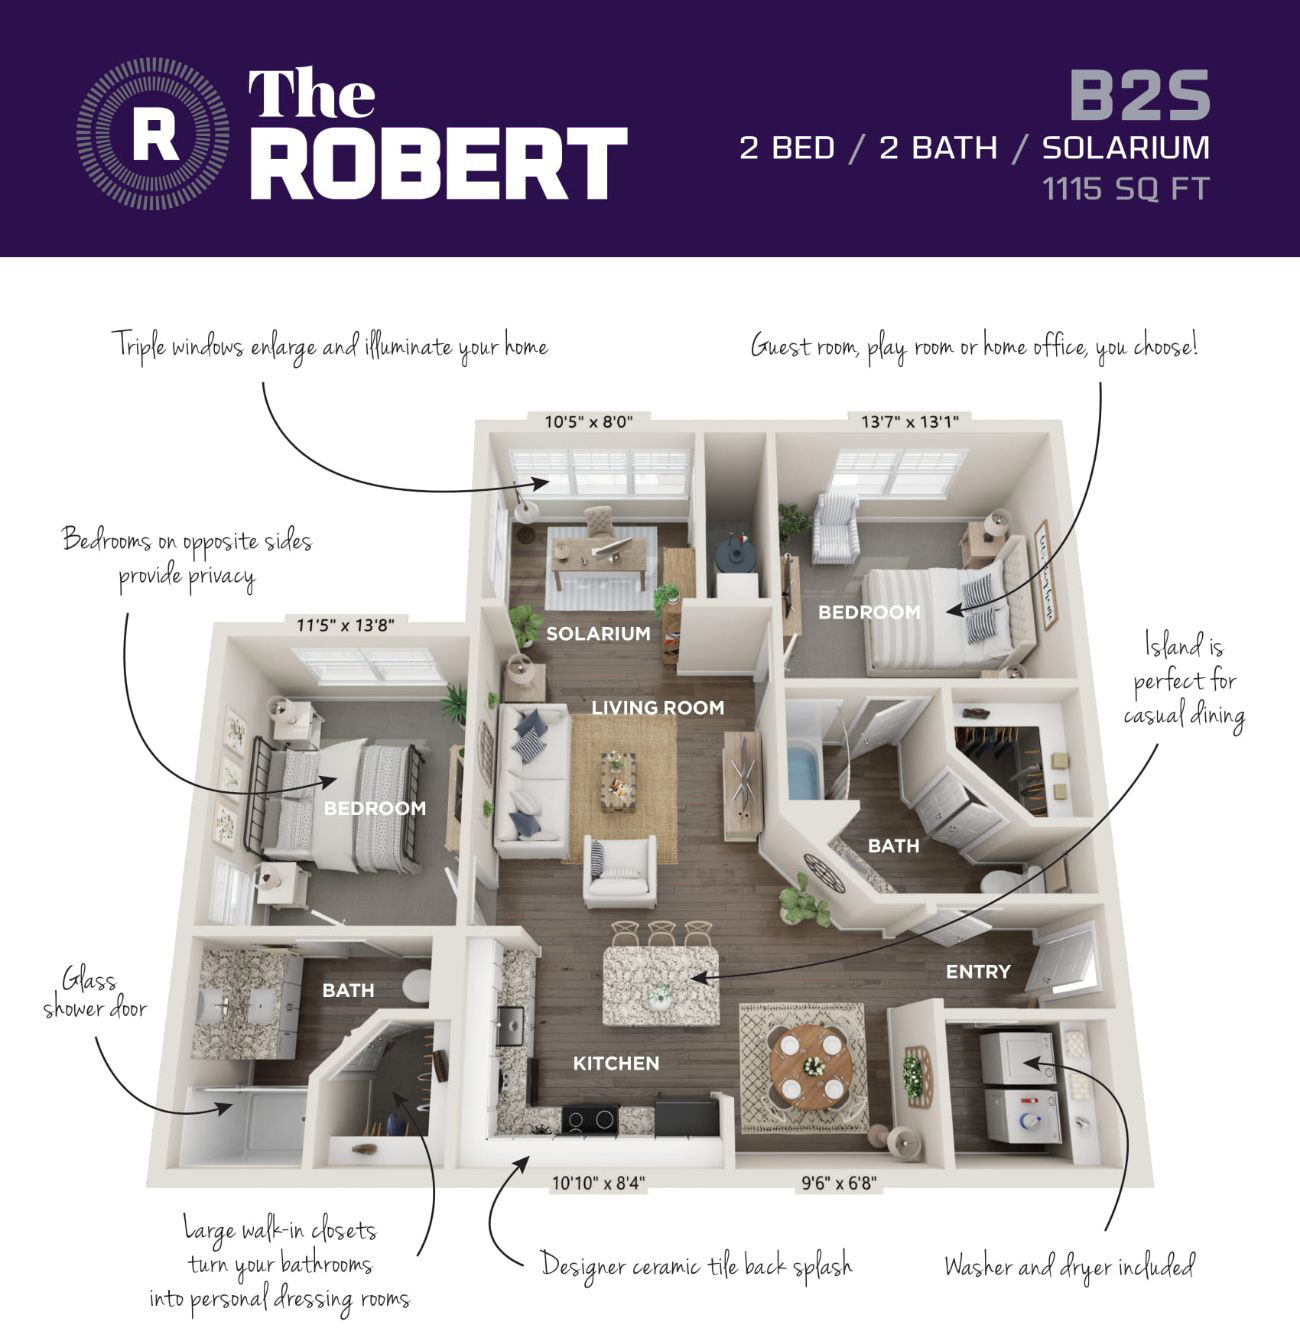 The Robert Apartments - B2S